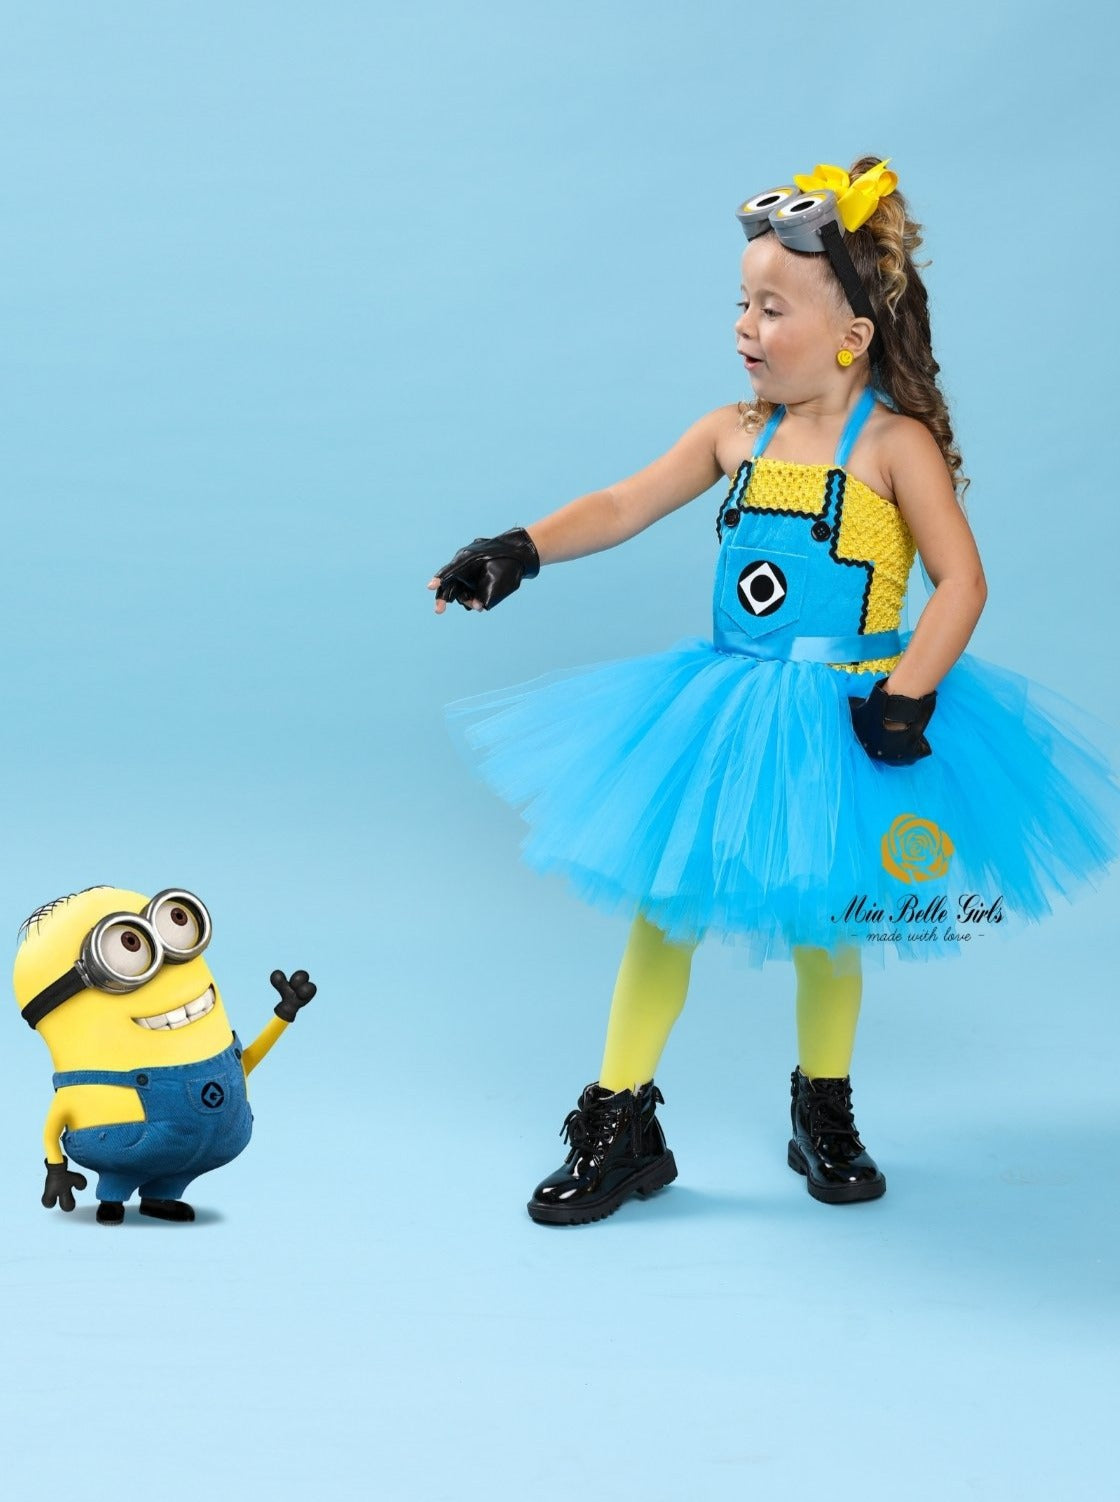 Kids Halloween Costume, Minions Inspired Tutu Dress